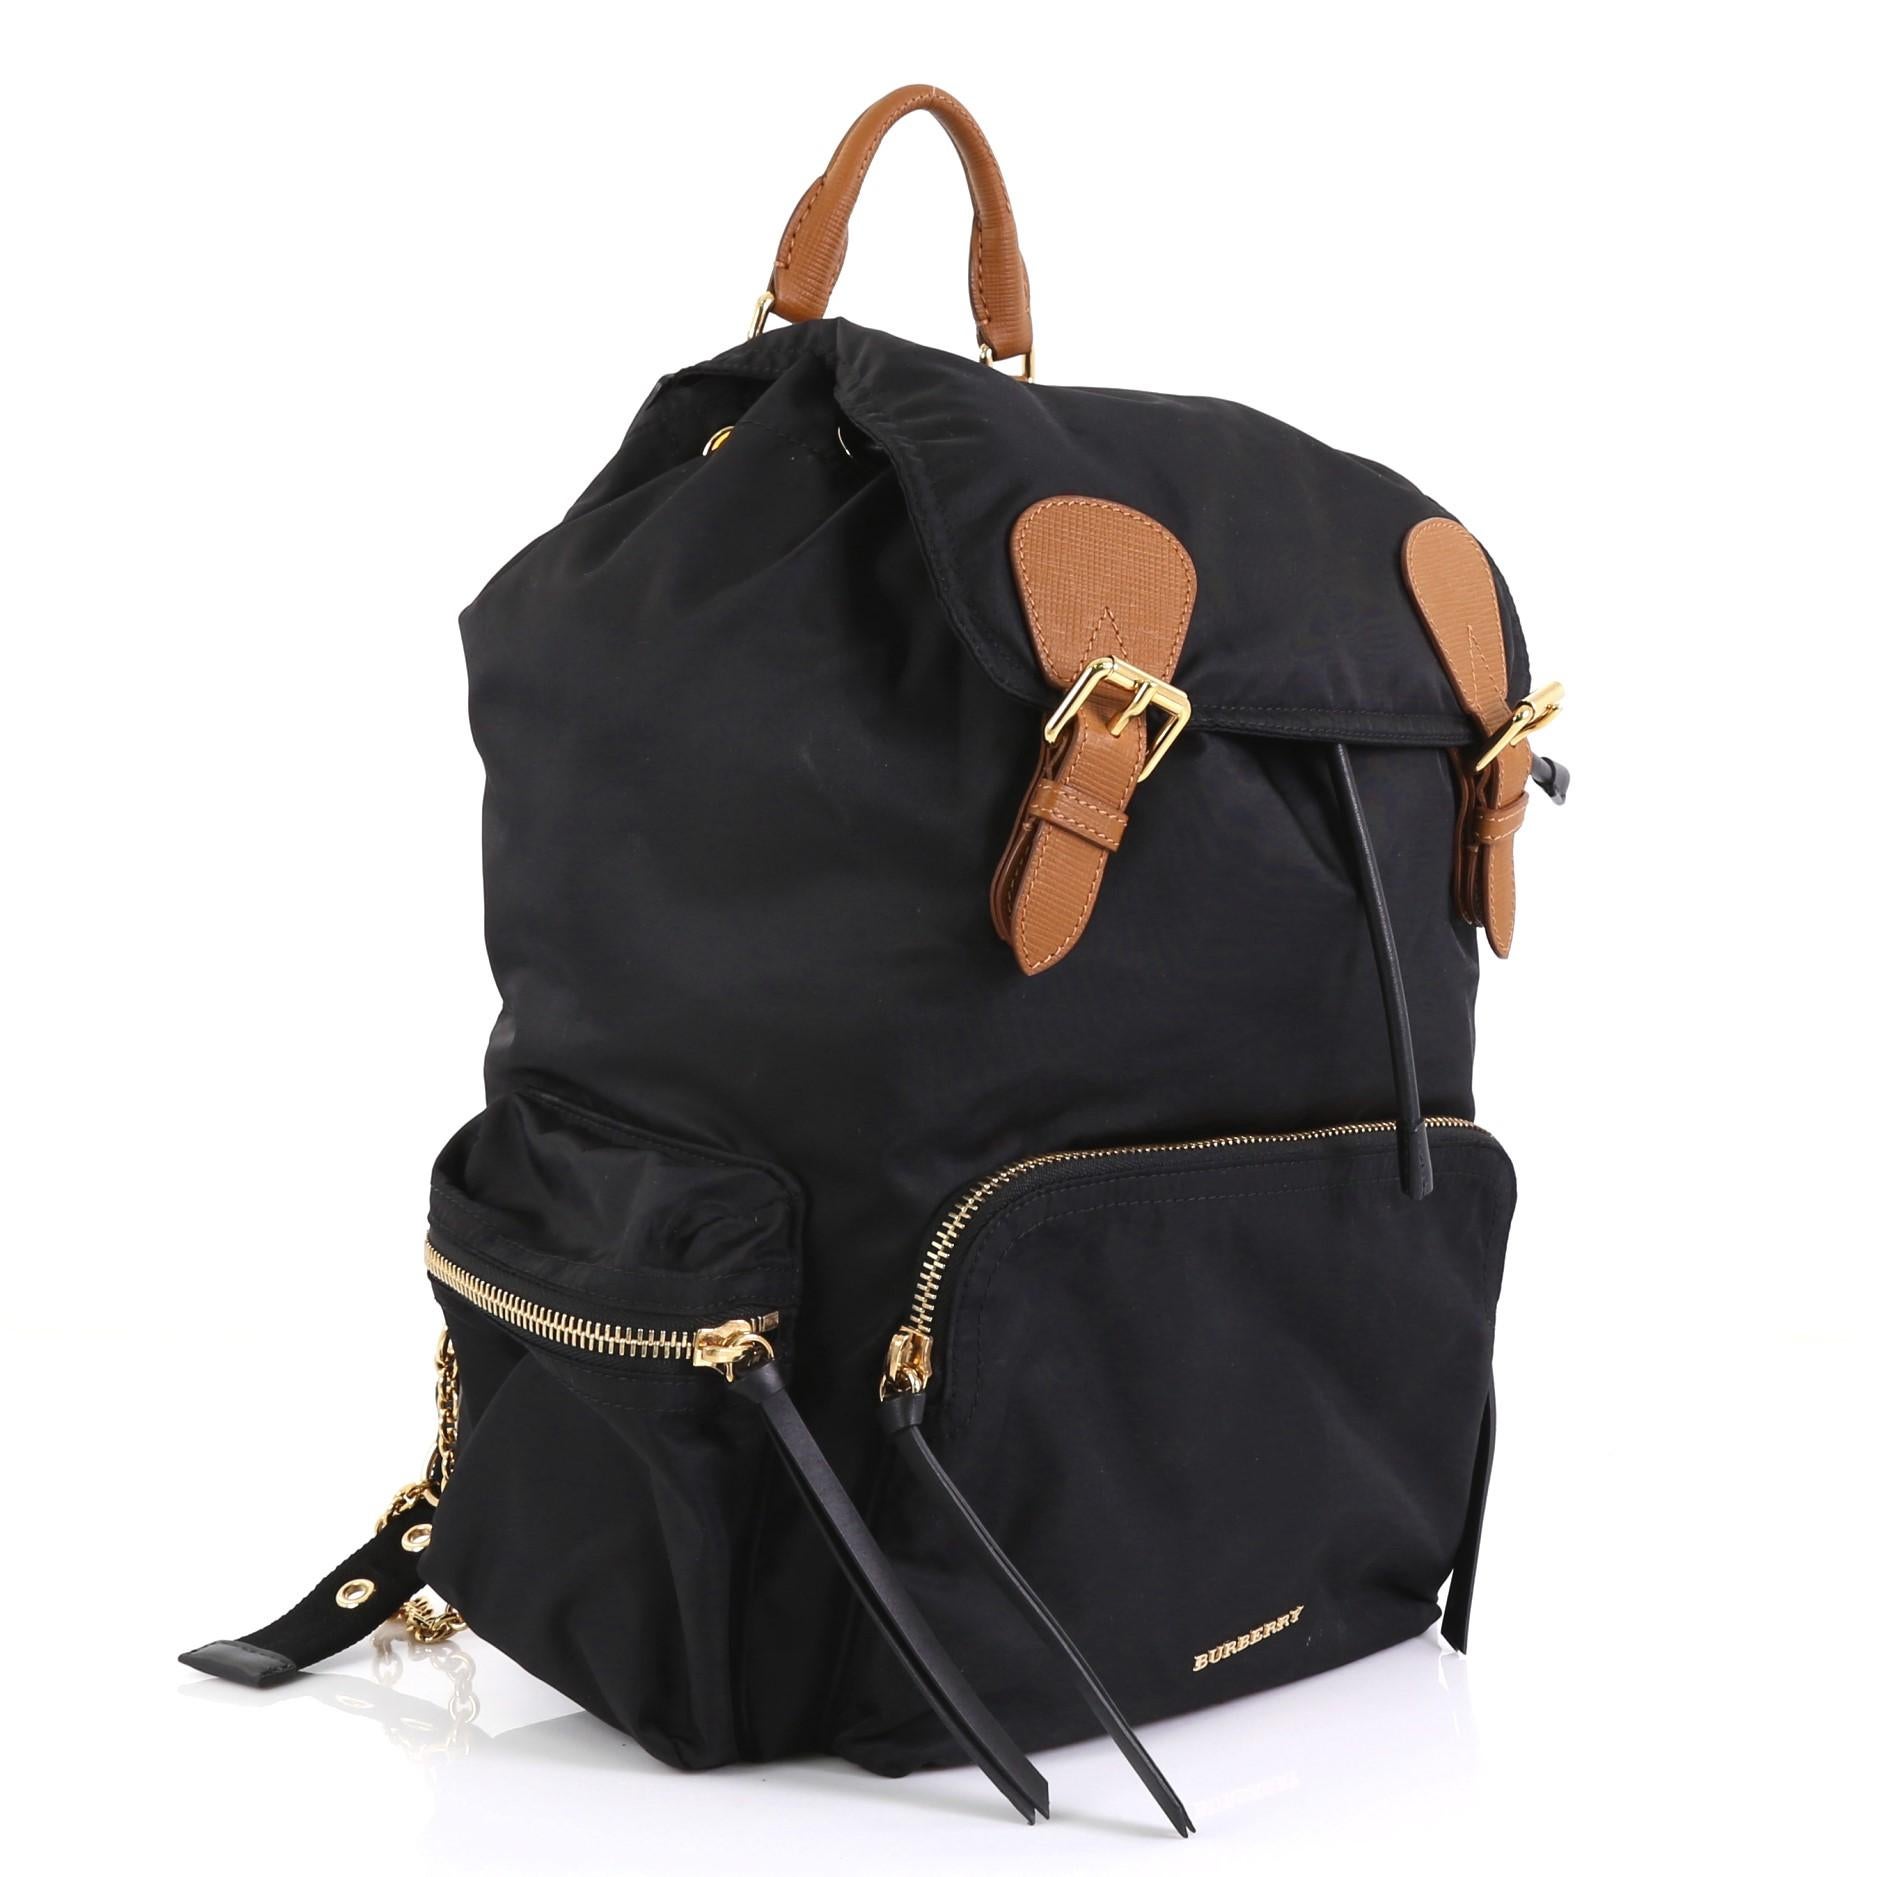 burberry rucksack backpack large